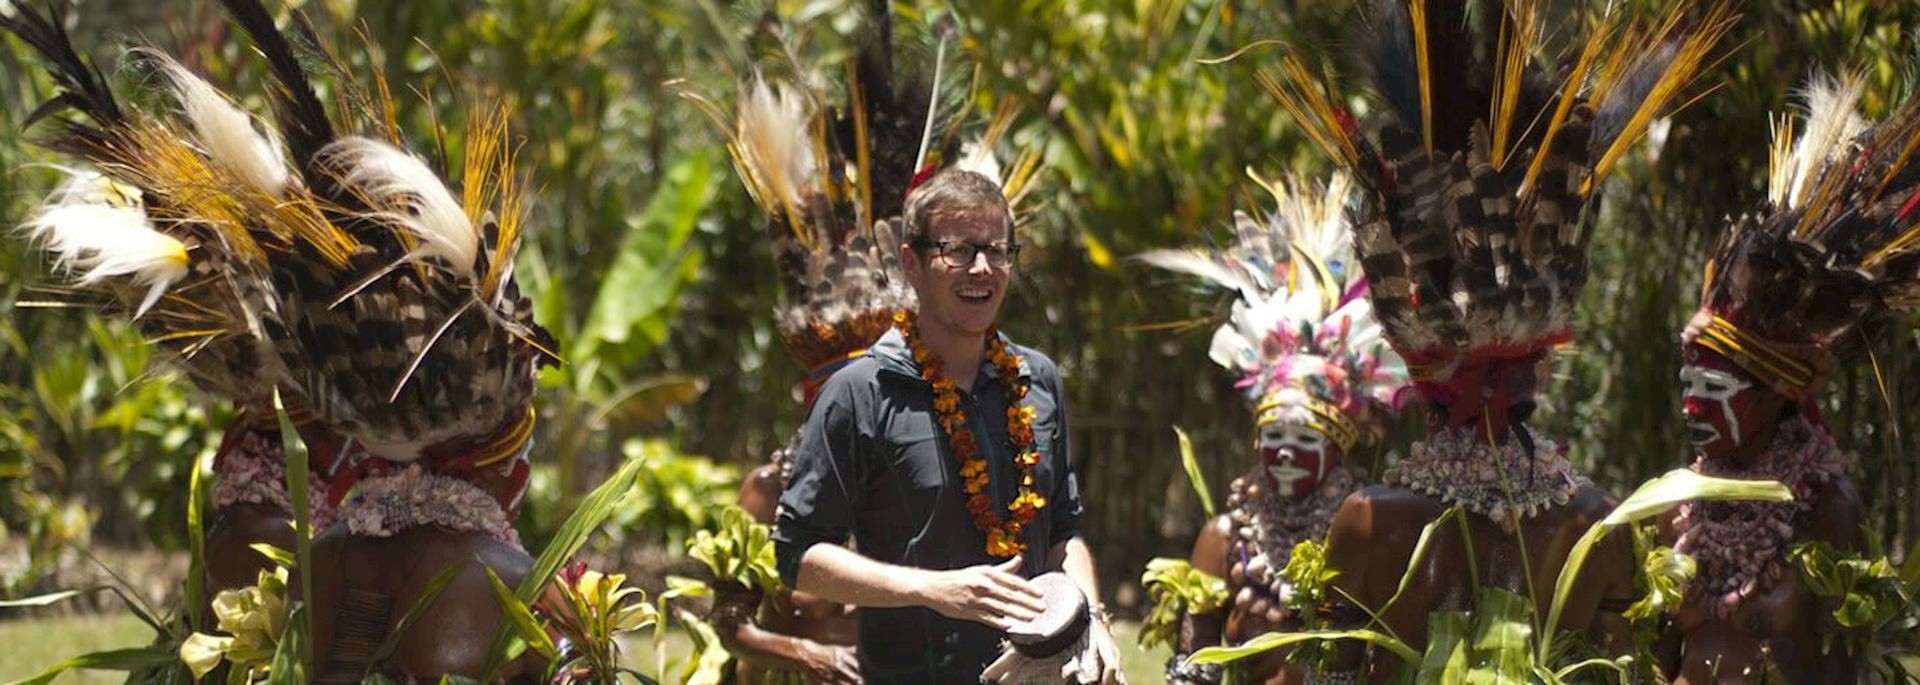 Mark with the Kuli tribe, Mount Hagen, Papua New Guinea